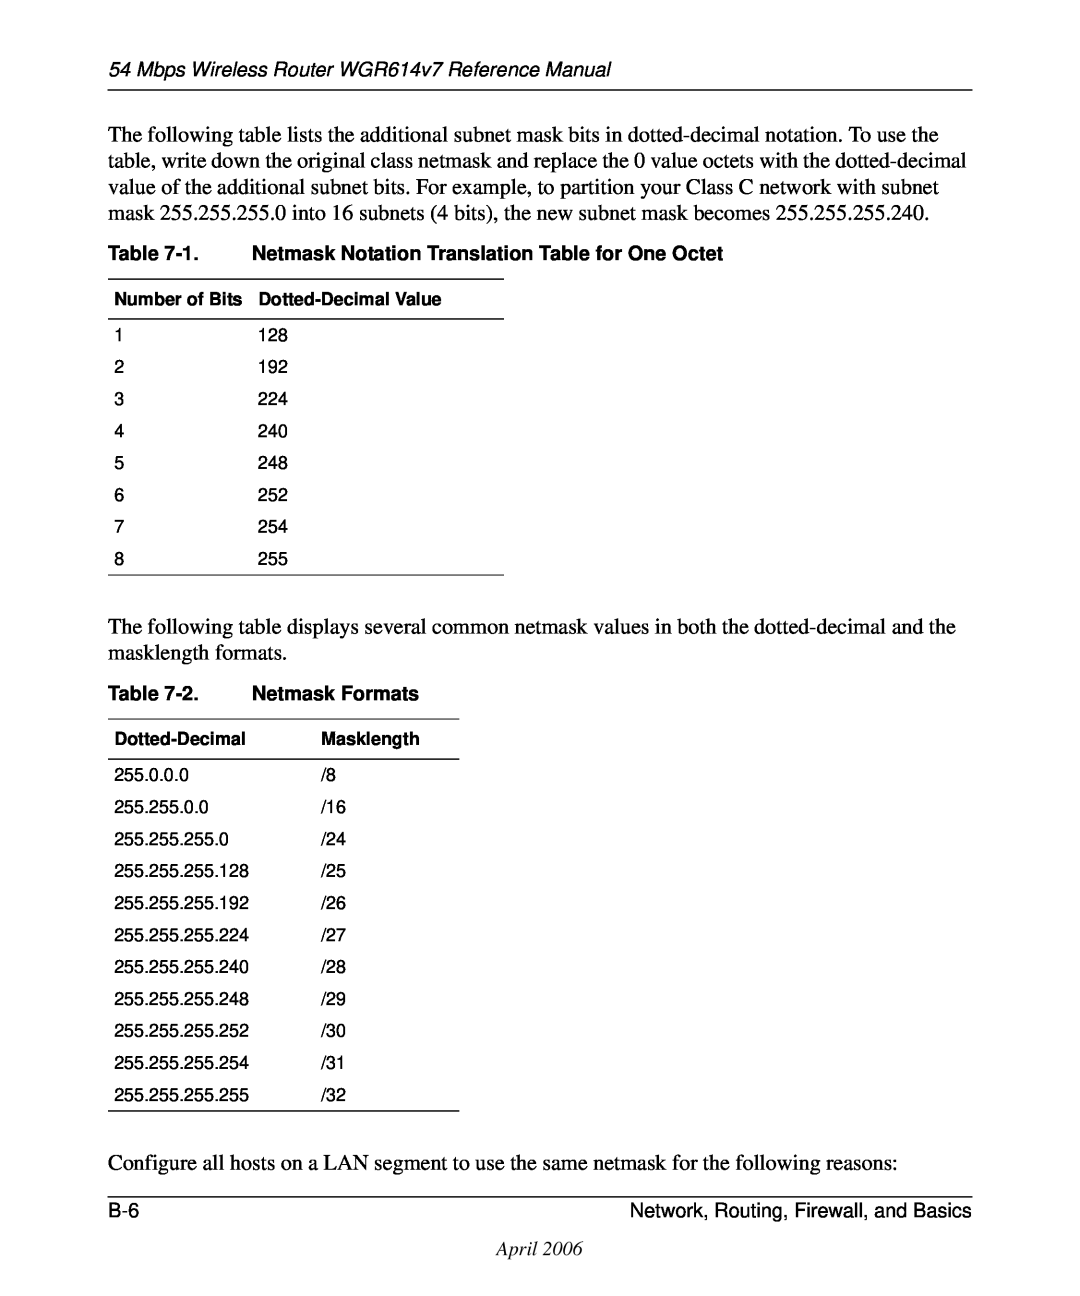 NETGEAR WGR614v7 manual 1. Netmask Notation Translation Table for One Octet, 2. Netmask Formats, Dotted-Decimal Masklength 